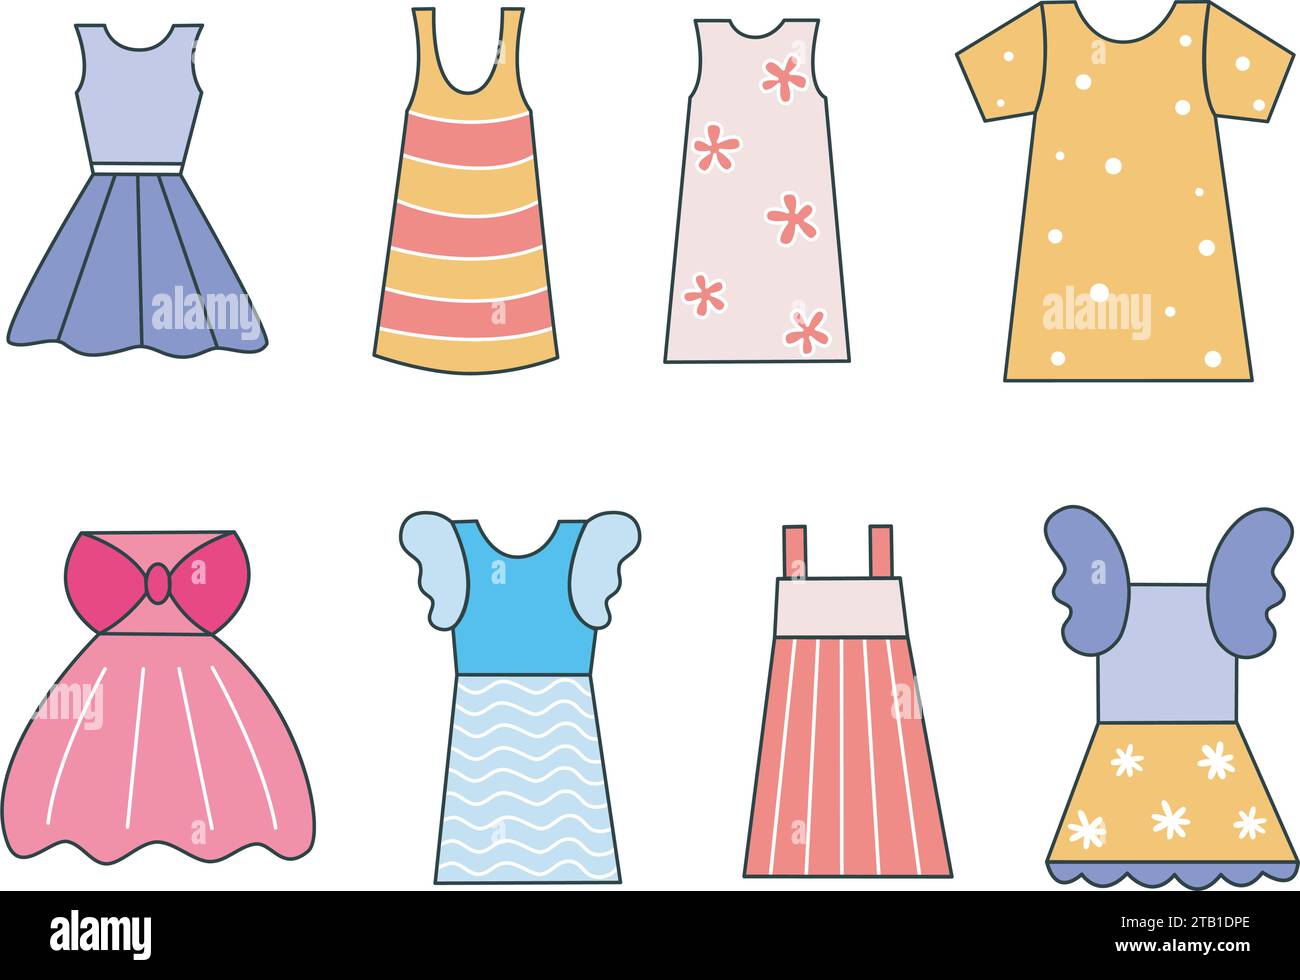 Hand Drawn Dress on Dressform Stock Vector - Illustration of